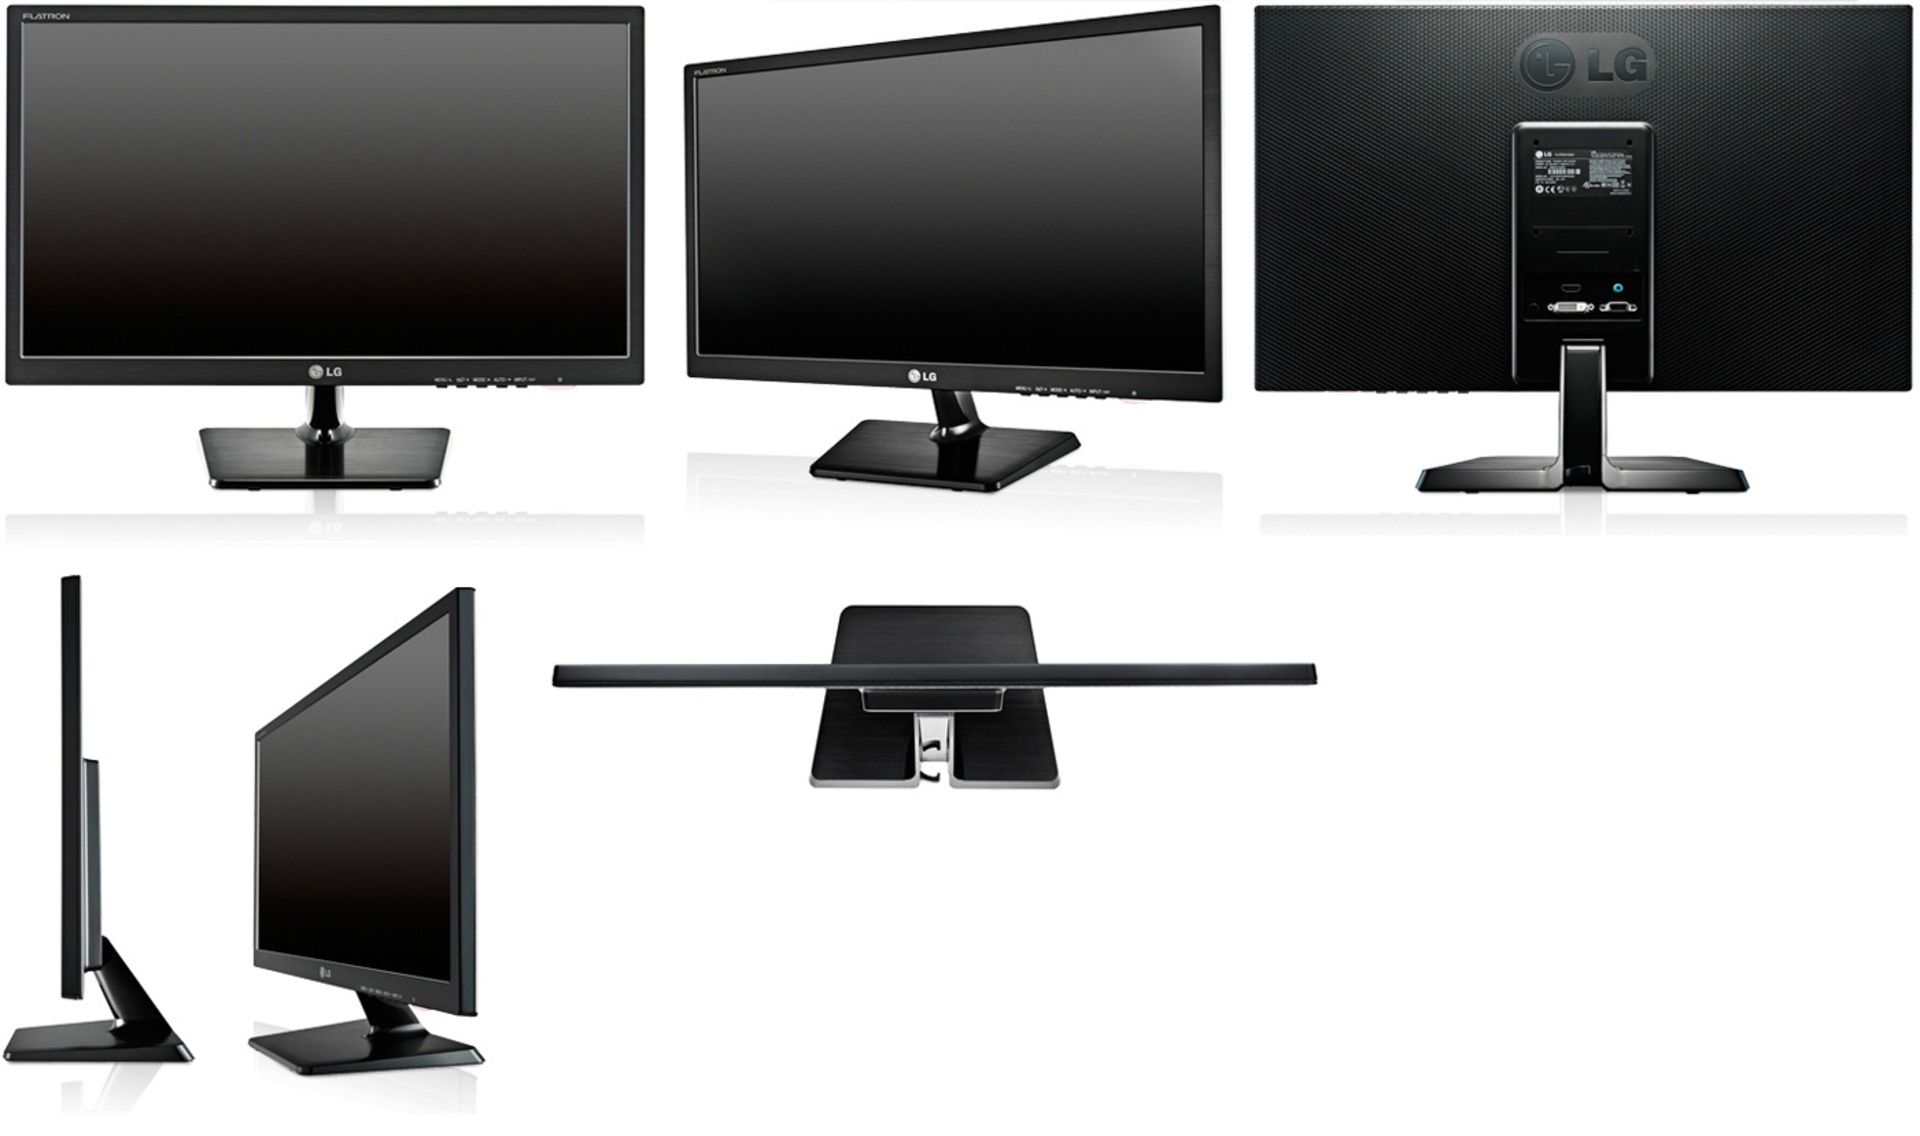 1 x LG 24" Full HD LED Monitor - Model LE2442V-BN - Resolution 1920 x 1080 - Inputs DVI, VGA, HDMI - - Image 5 of 5